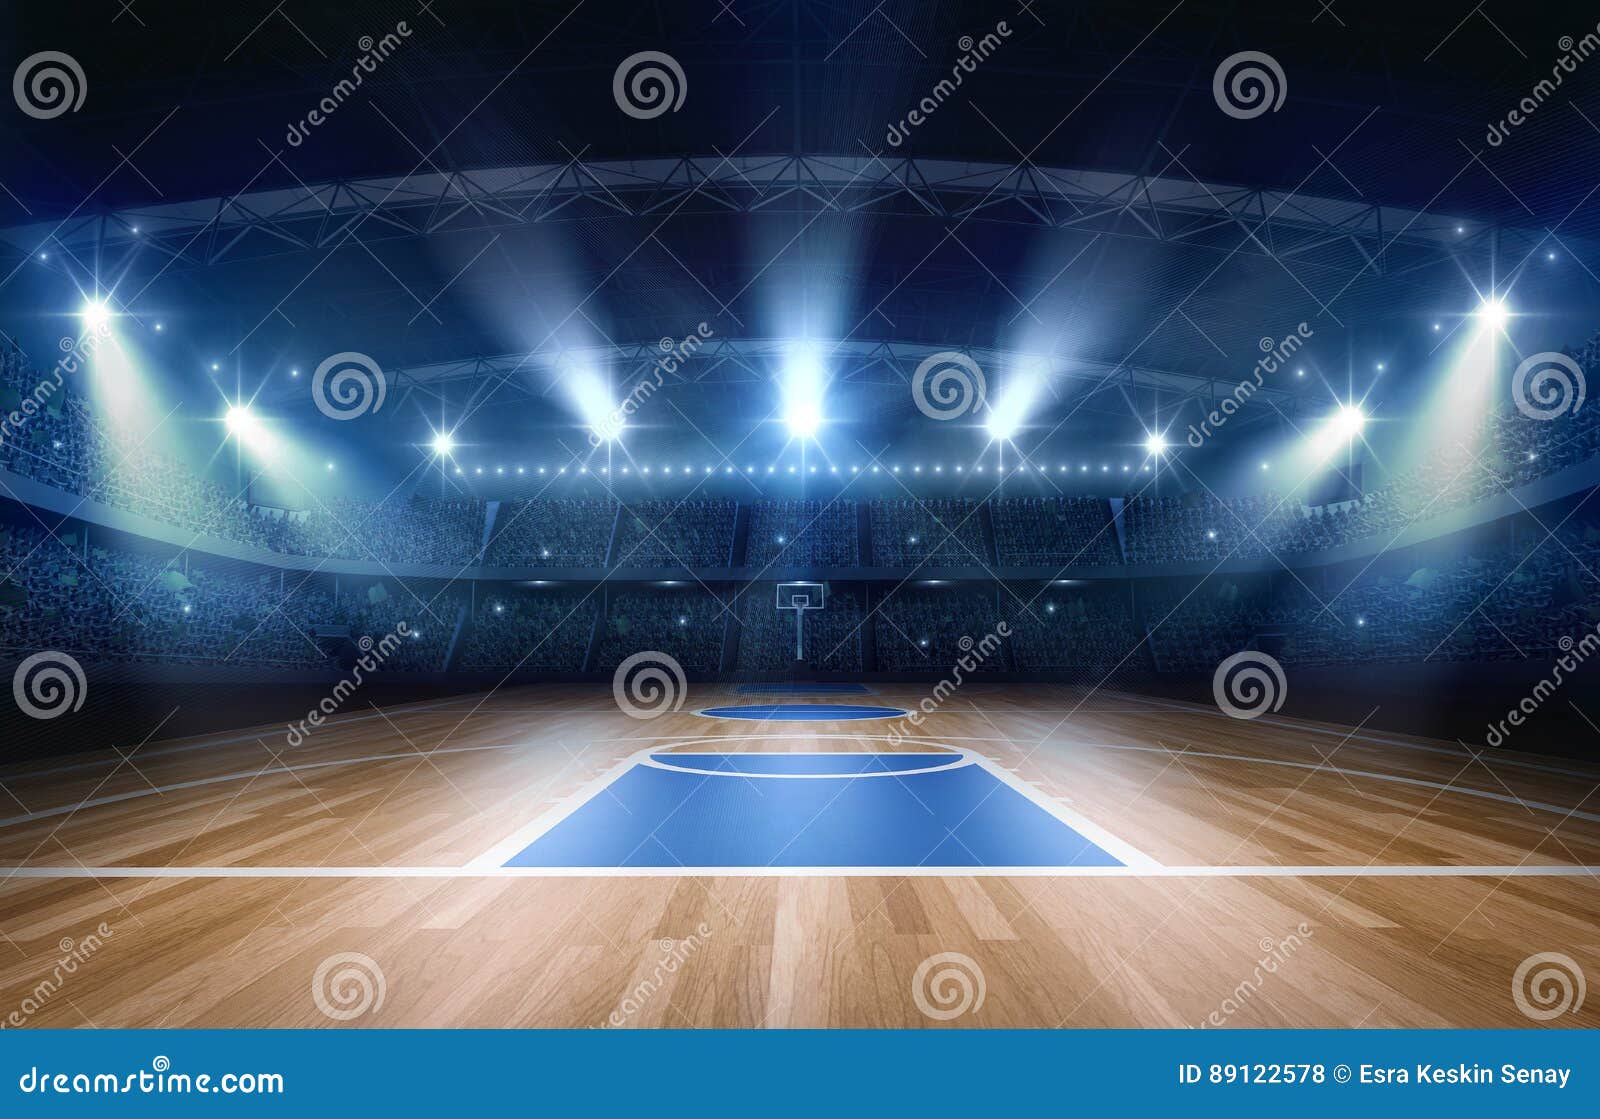 basketball arena,3d rendering